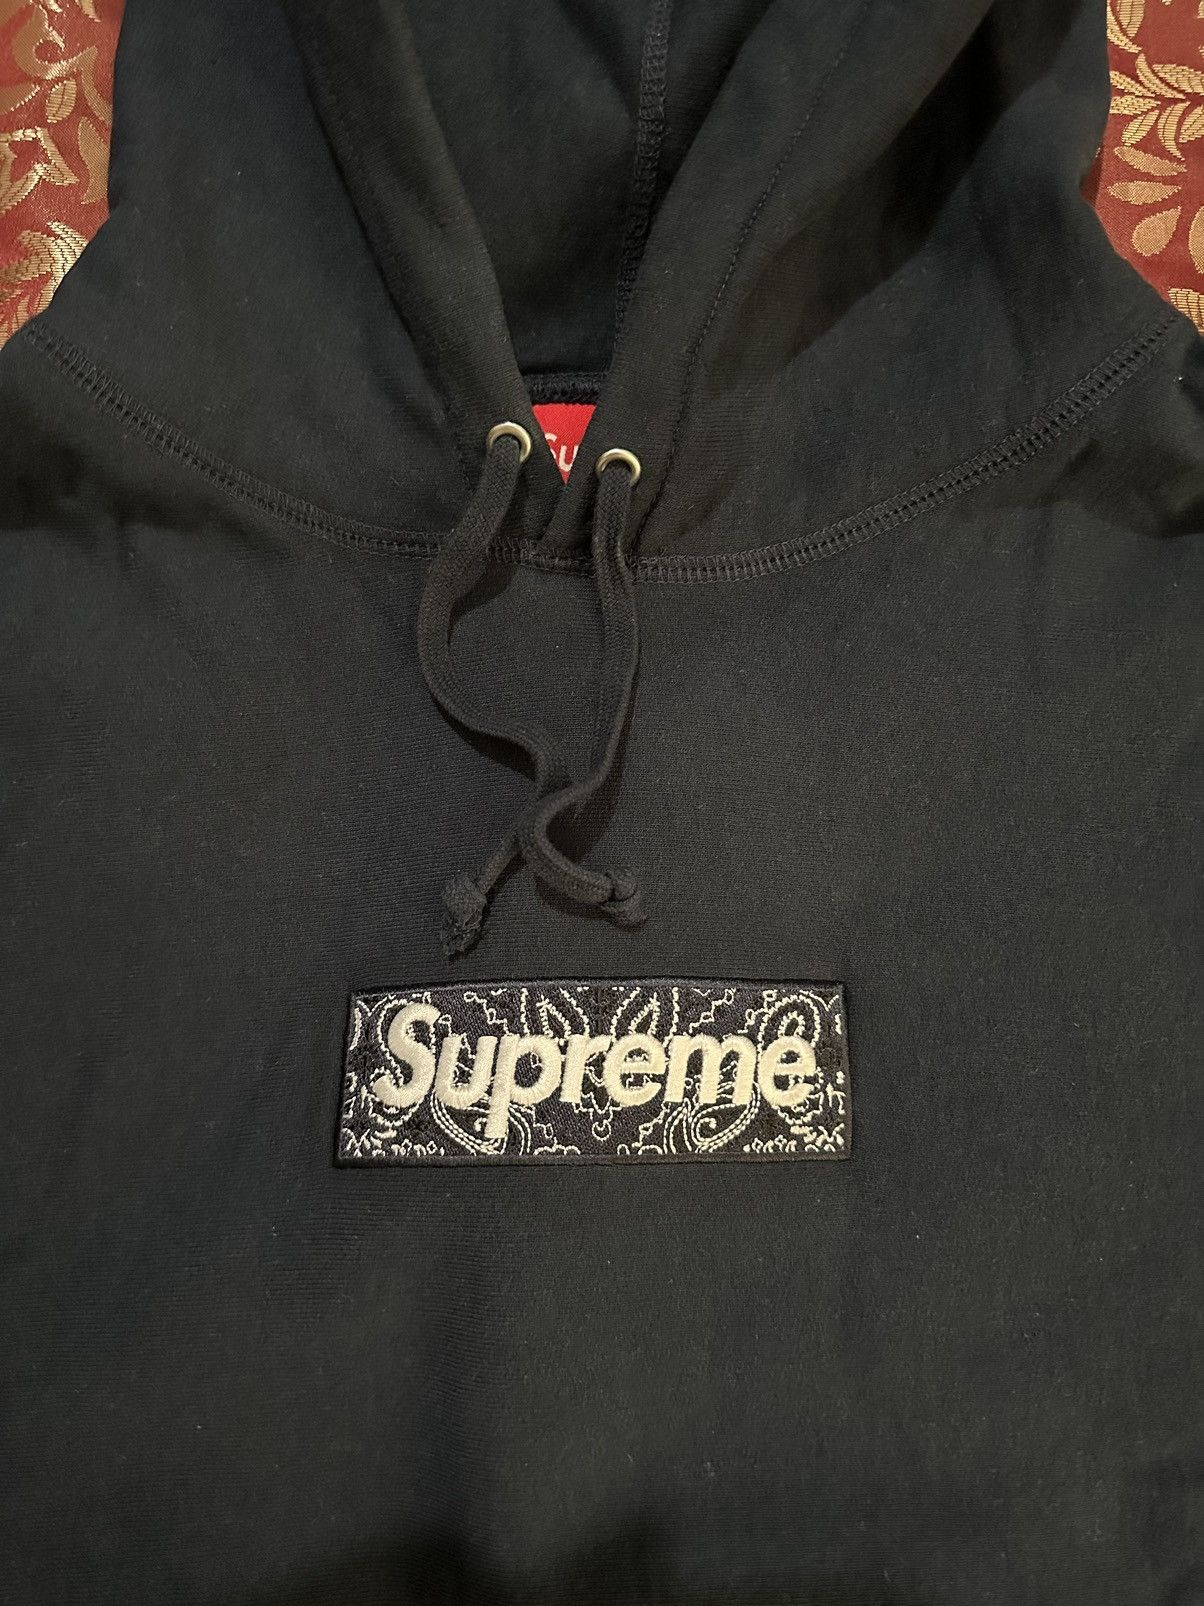 Supreme Supreme Bandana Box Logo Hooded Sweatshirt Navy Blue Large Size US L / EU 52-54 / 3 - 4 Thumbnail